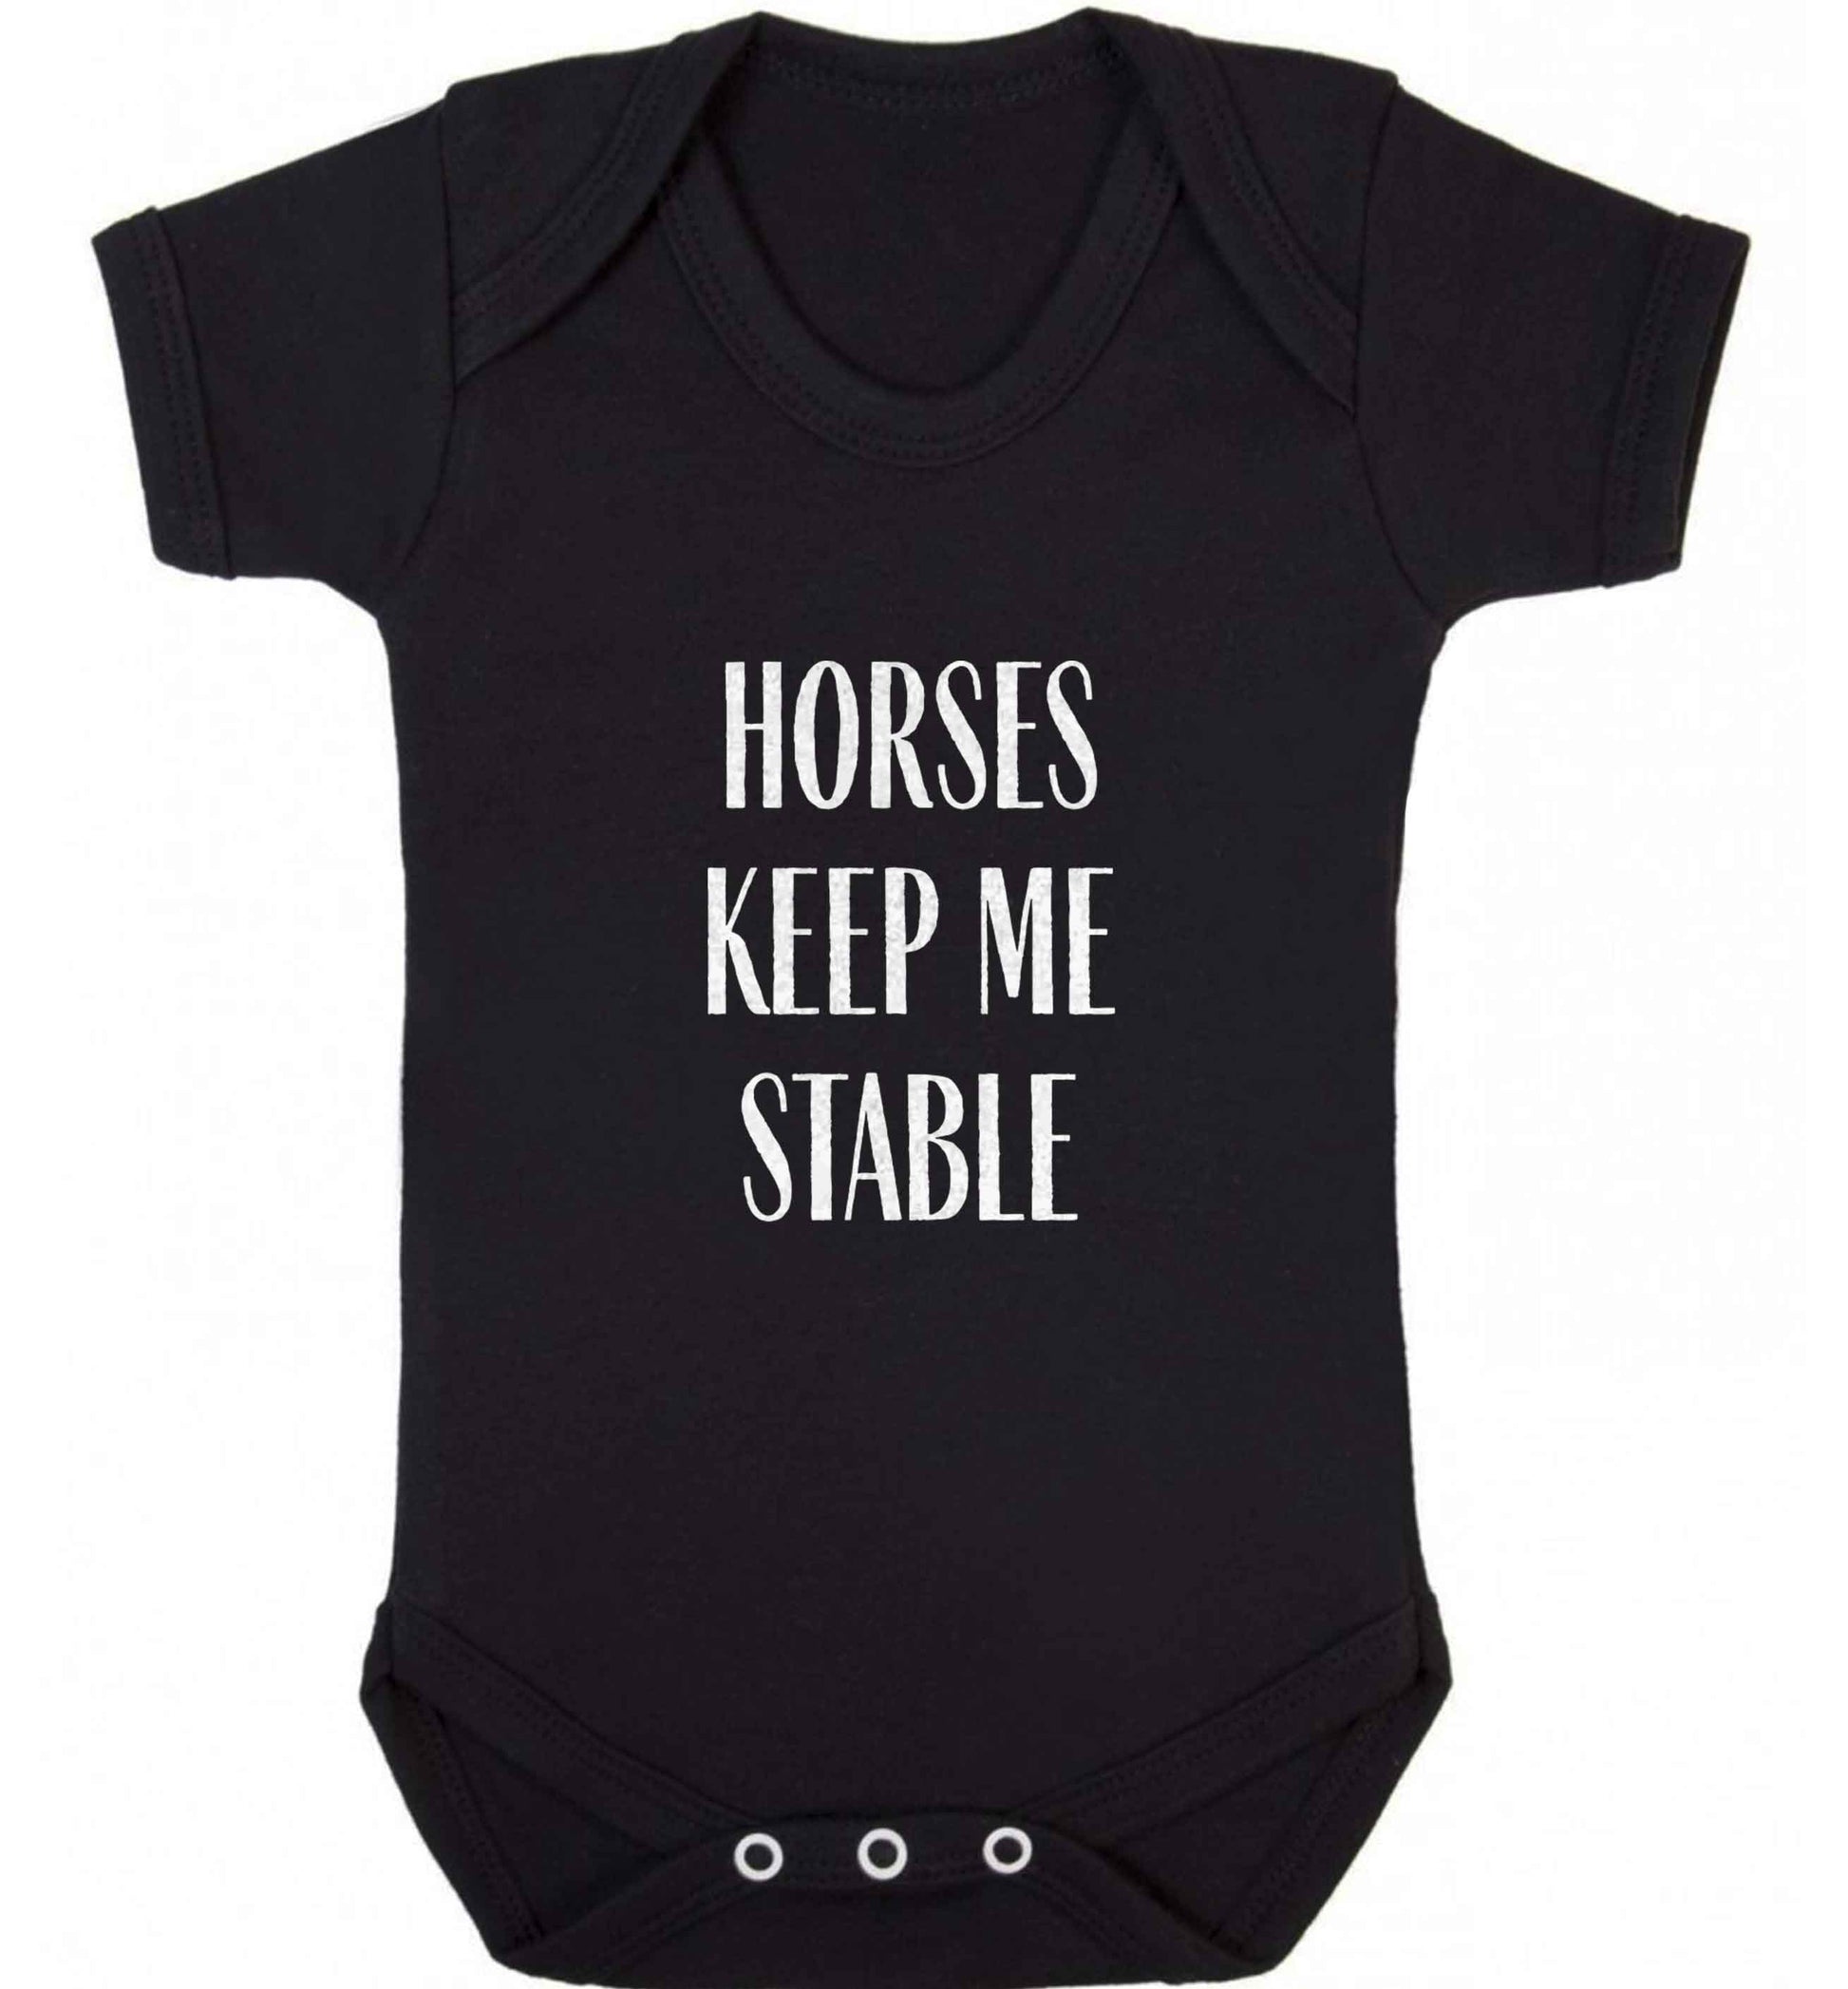 Horses keep me stable baby vest black 18-24 months